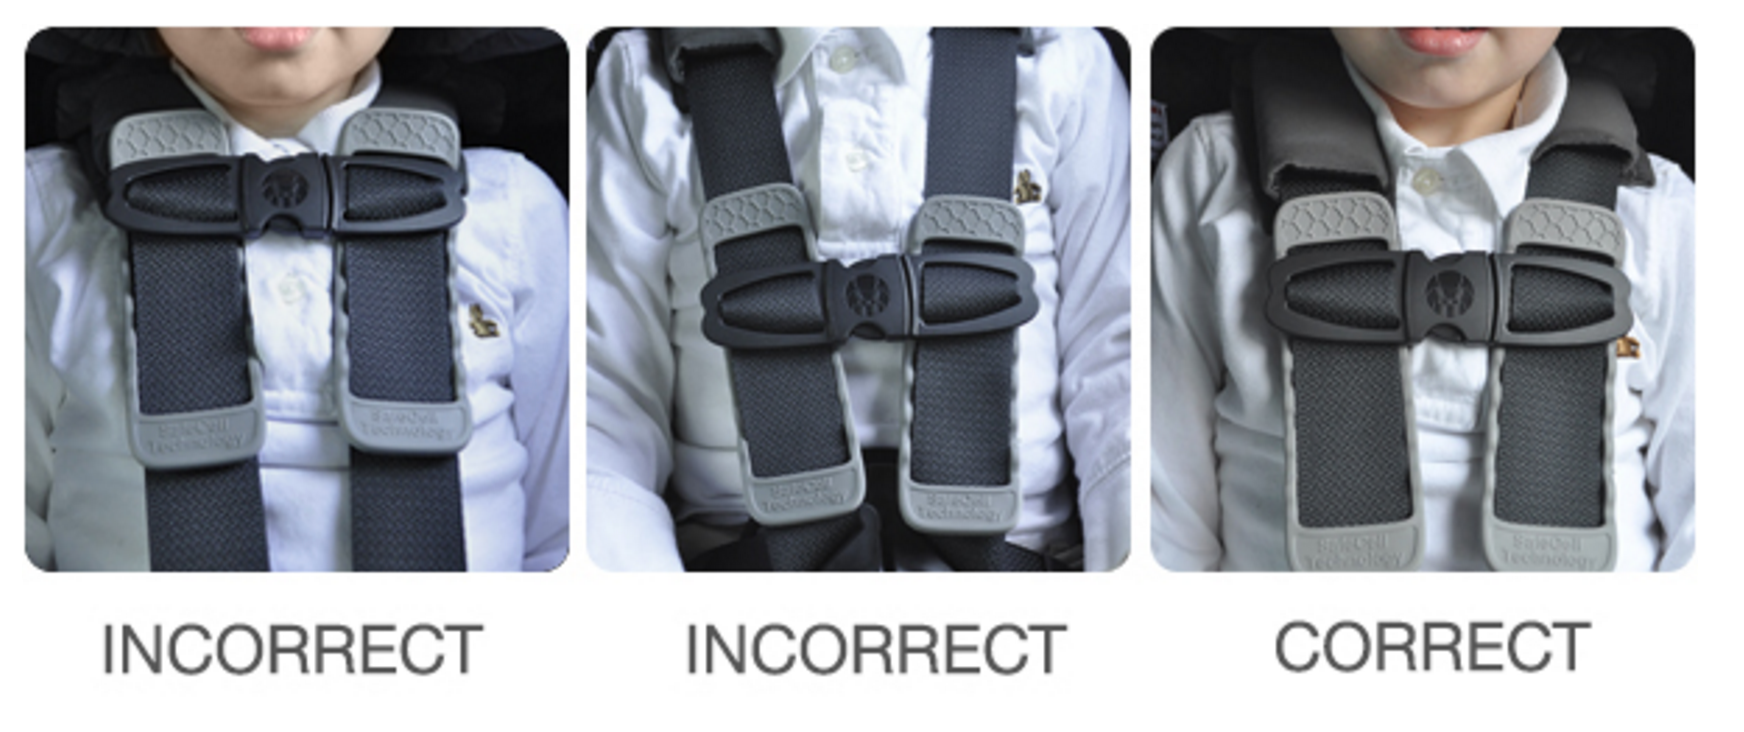 Correct use of kids' car seat harnesses: So important! | via Britax